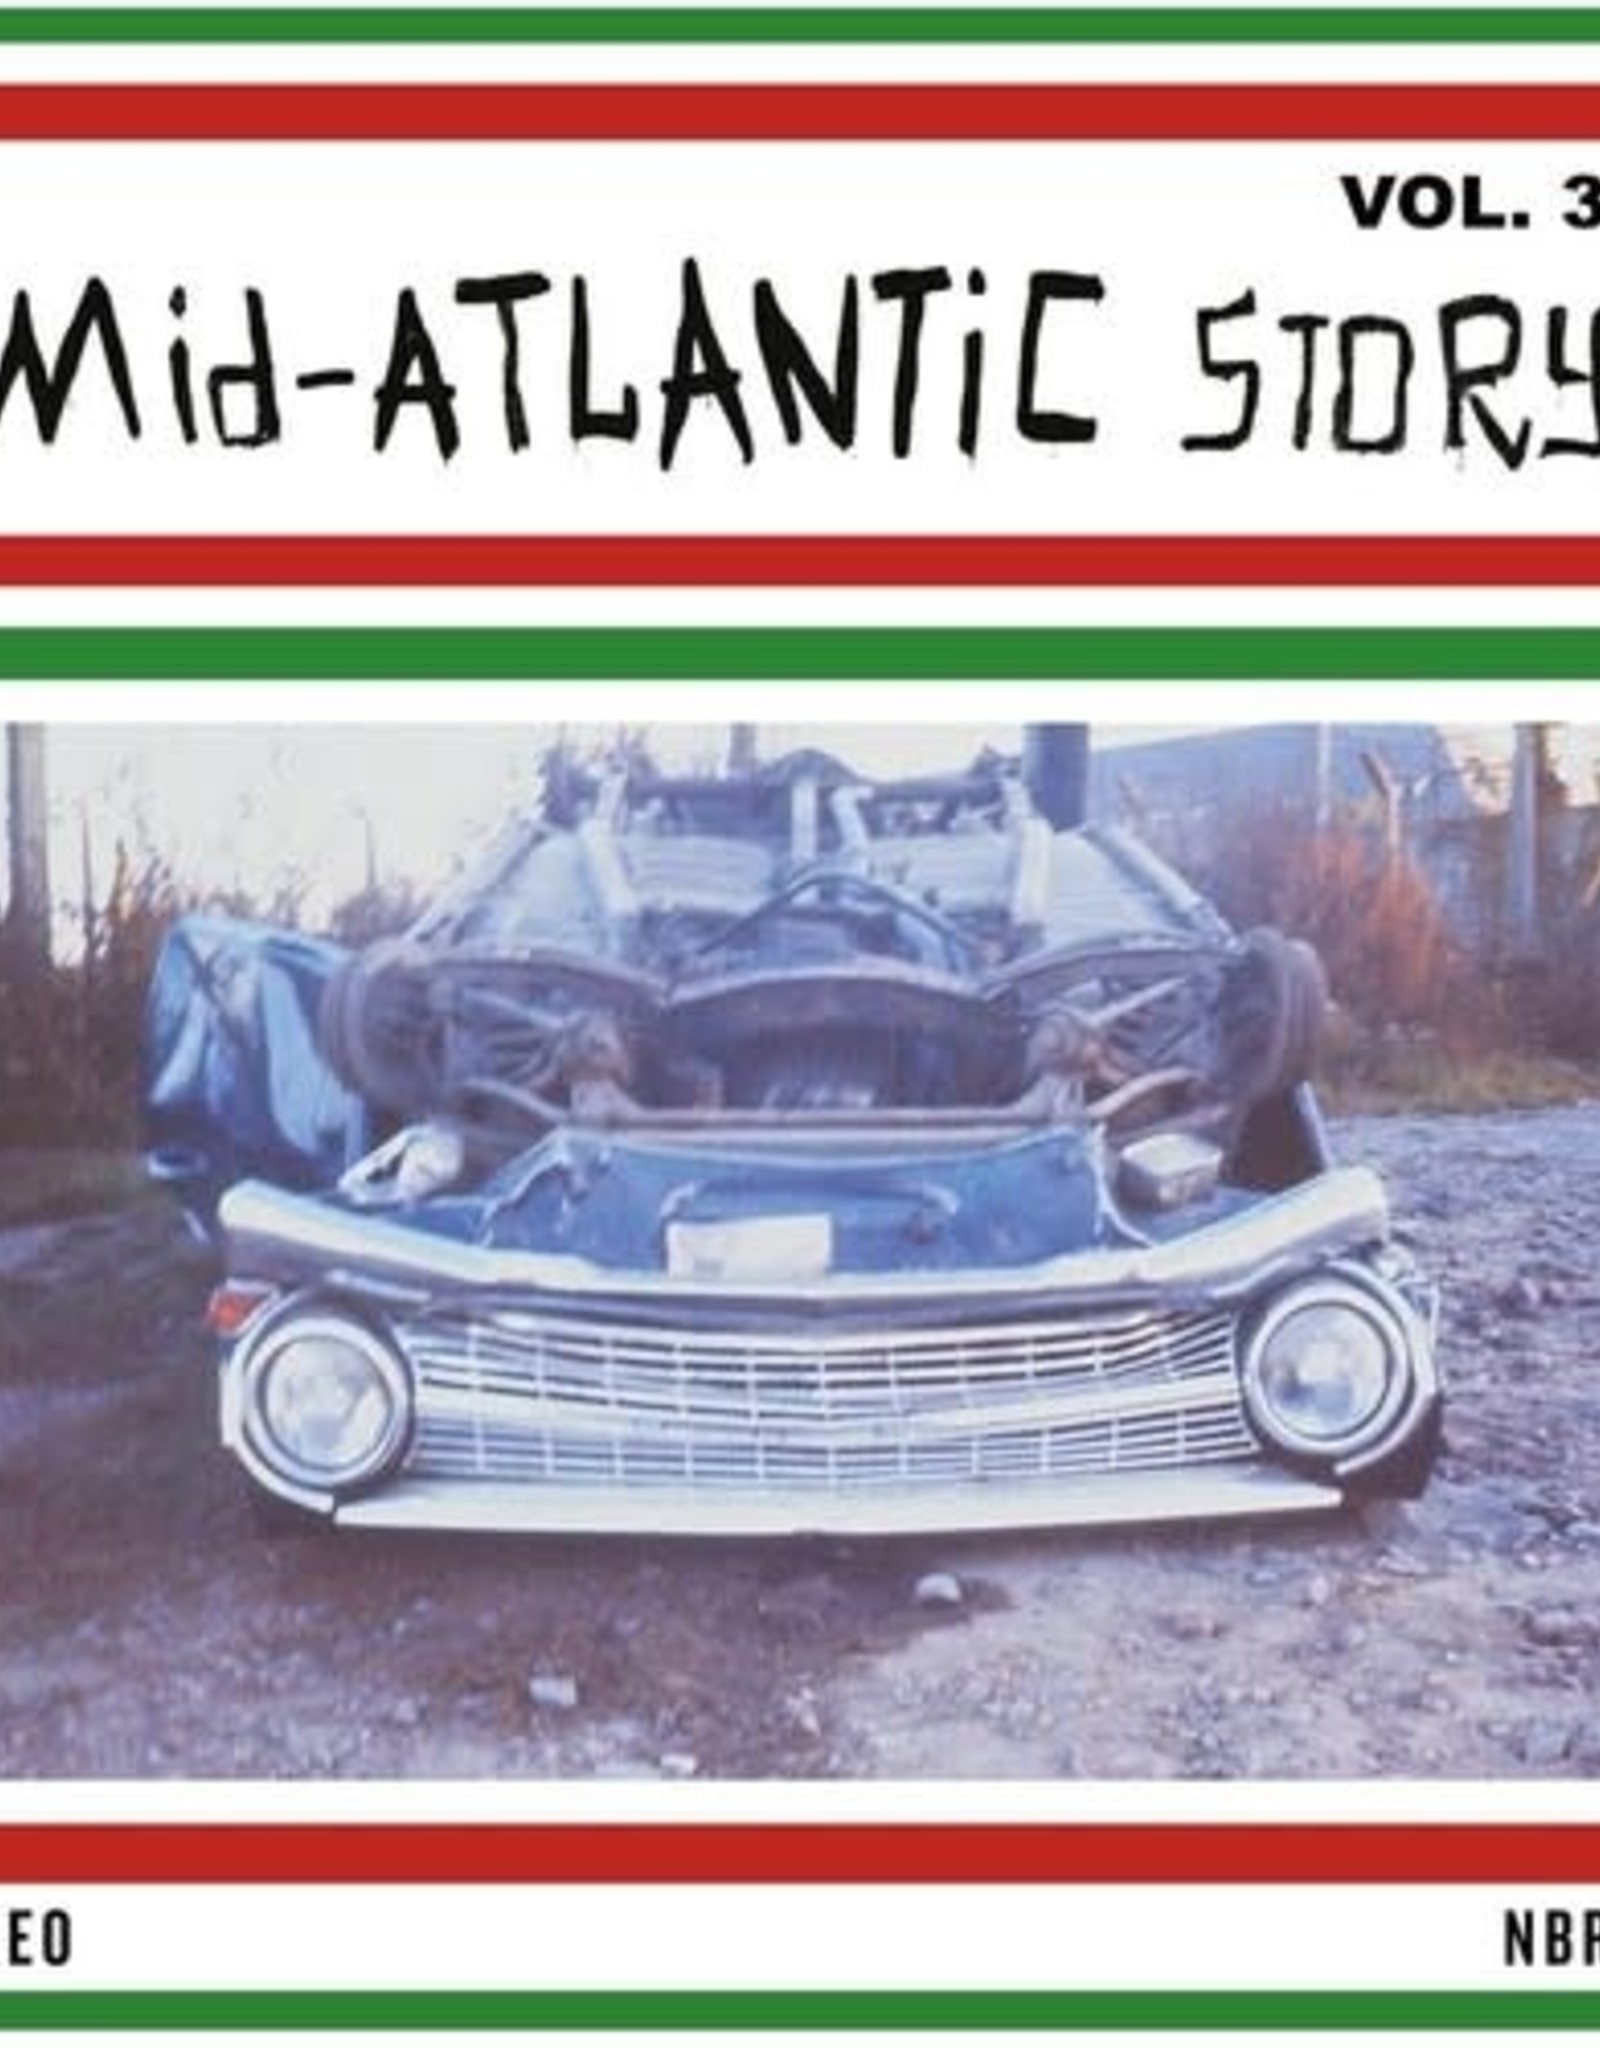 Various Artists - Mid-Atlantic Story Vol. 3